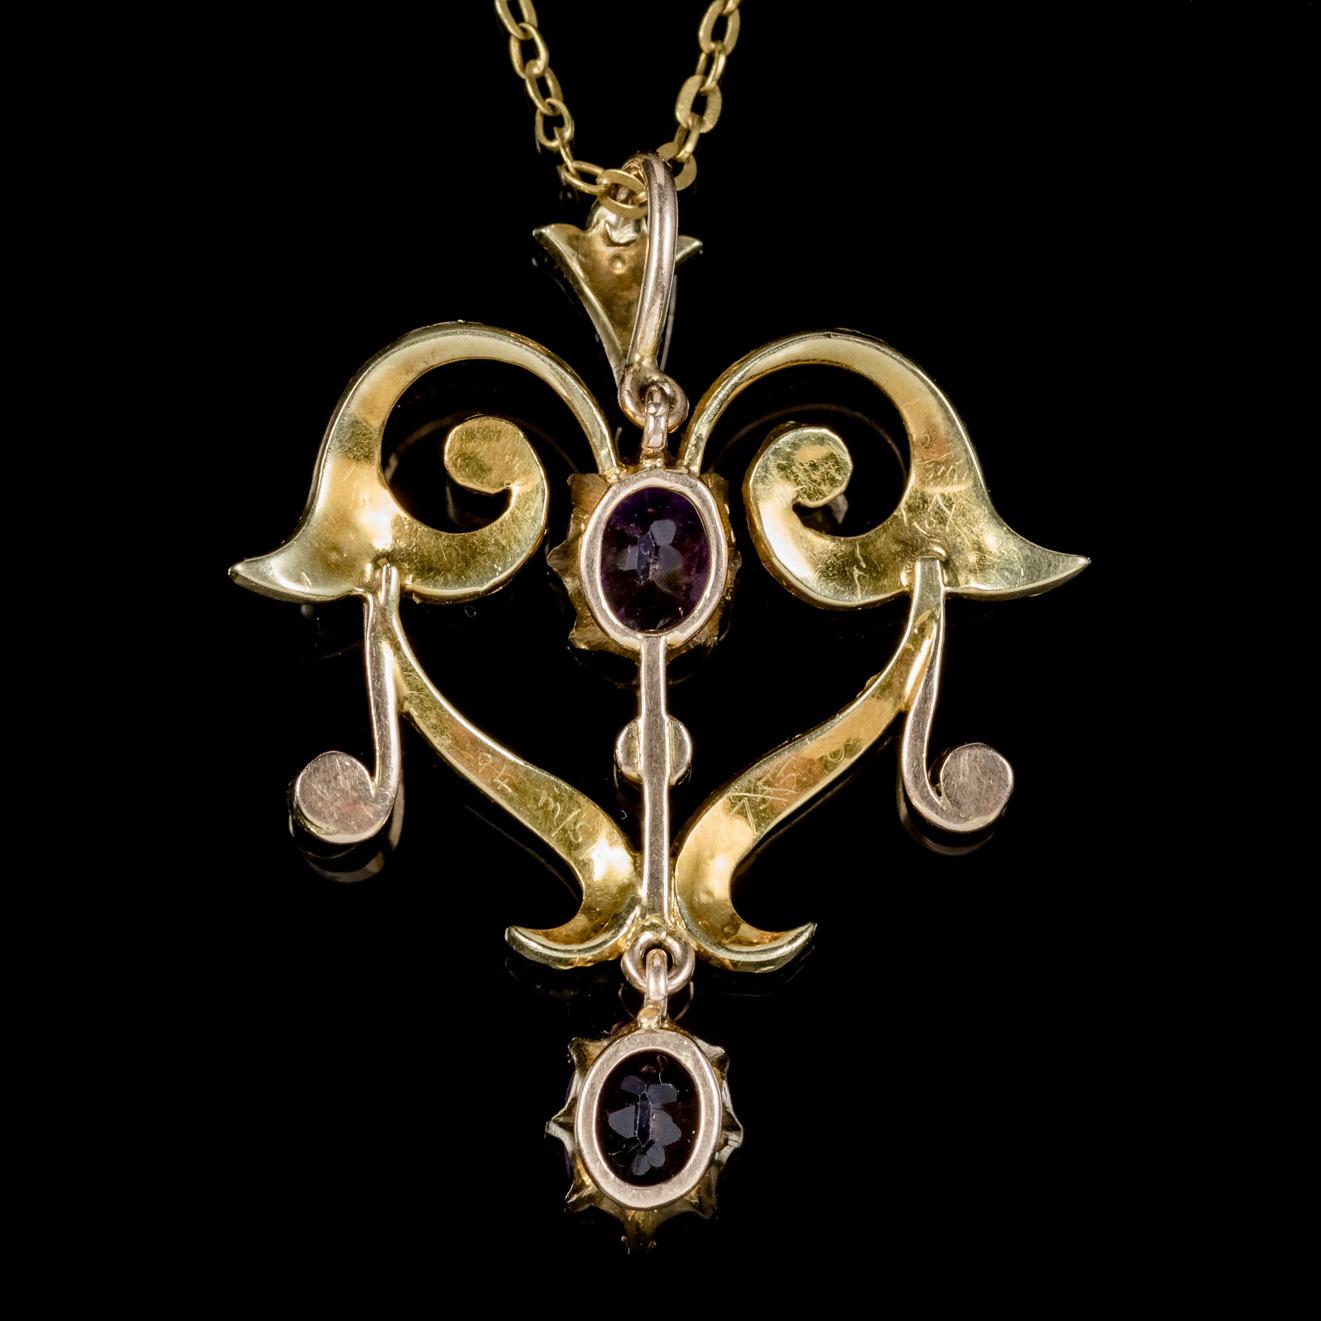 Women's Antique Victorian Amethyst Pearl Pendant Necklace 9 Carat Gold, circa 1880